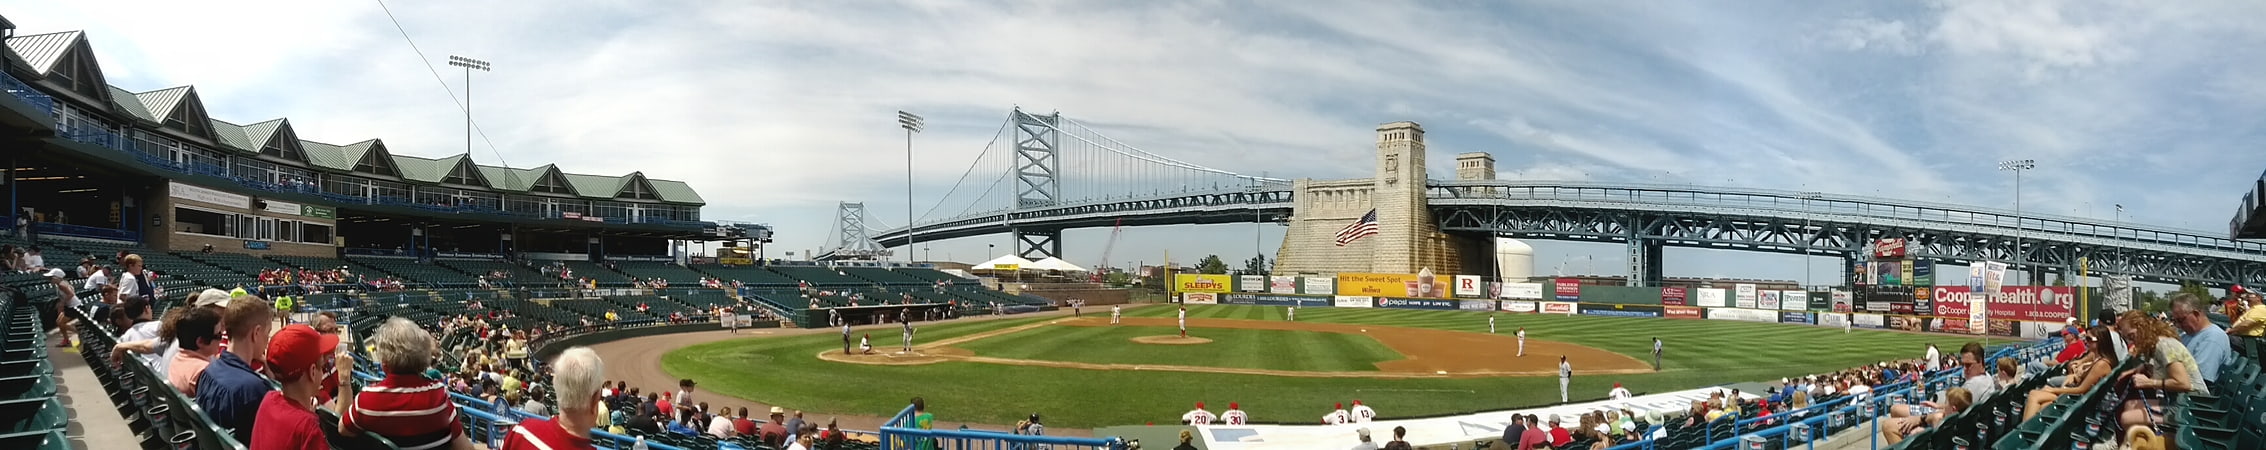 Ballpark in Camden, New Jersey